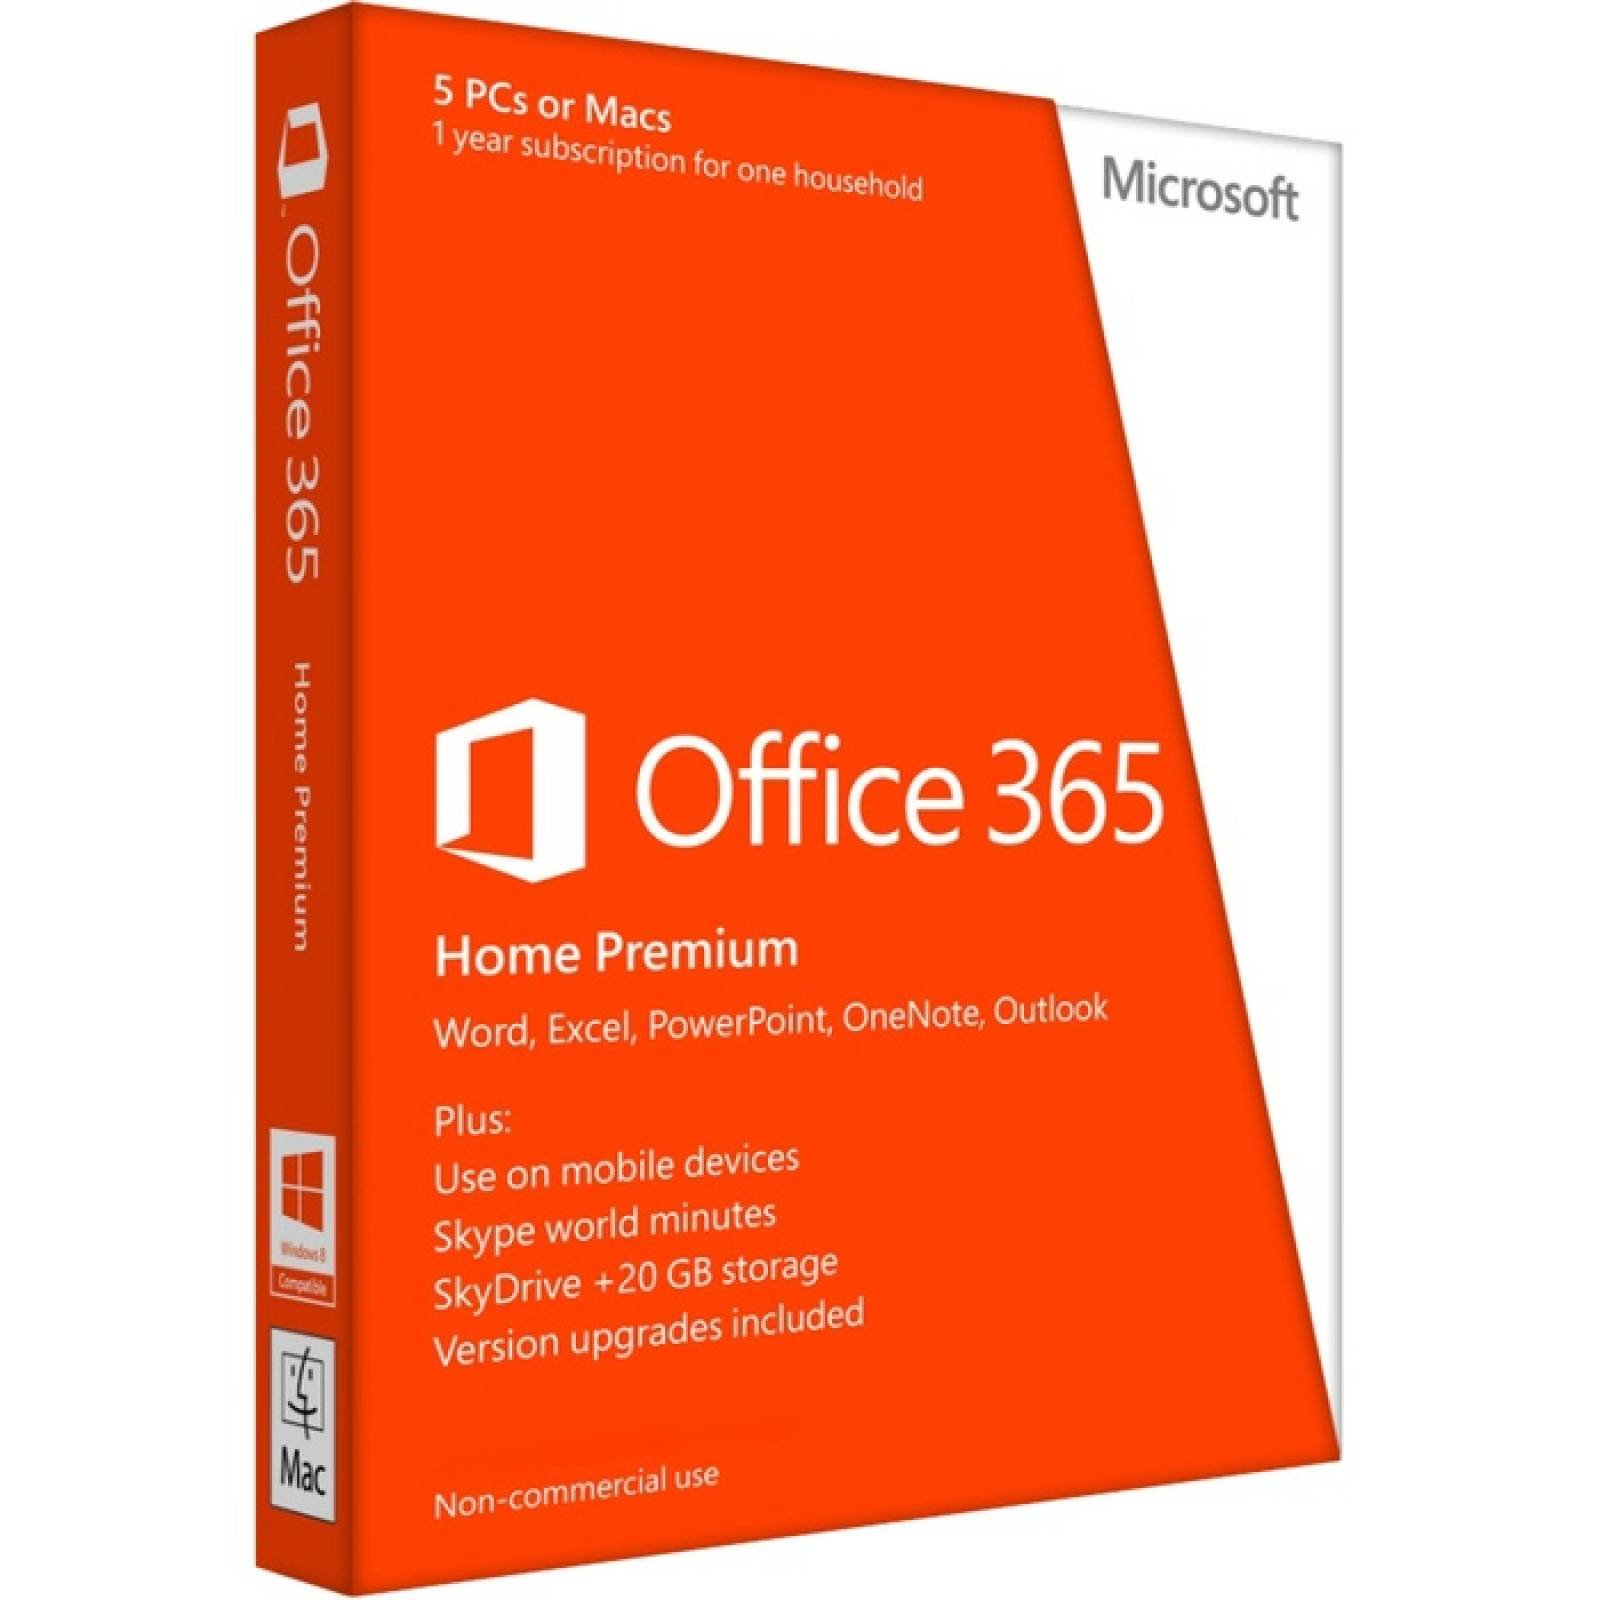 Microsoft Office 365 Home Premium 3264bit  Licencia de suscripcin  5 PC  Mac 5 tabletas 5 telfonos inteligentes